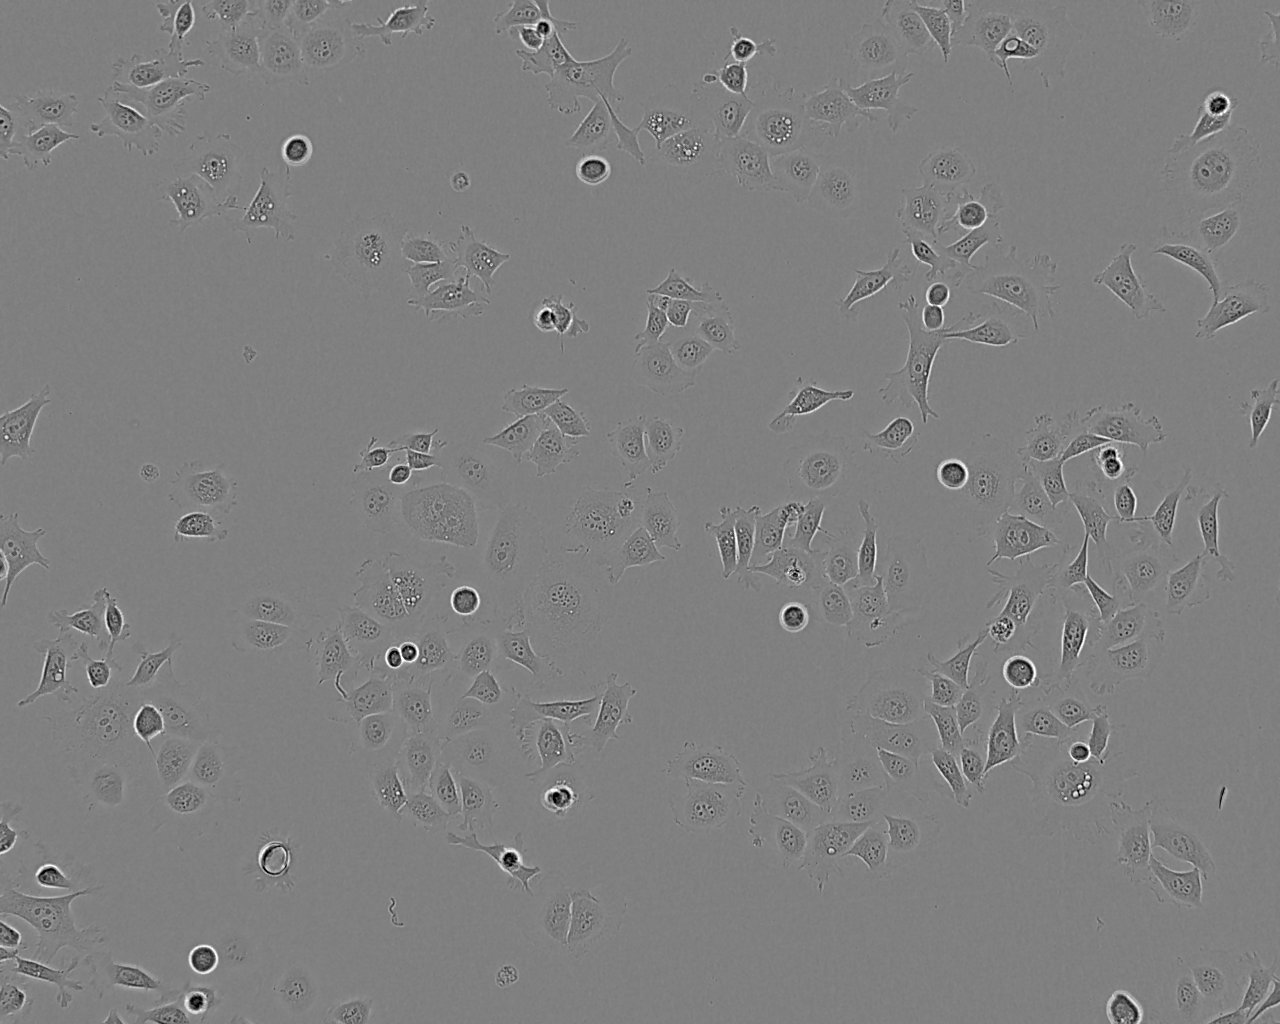 ARPE-19 Cells|人视网膜色素上皮克隆细胞(包送STR鉴定报告),ARPE-19 Cells